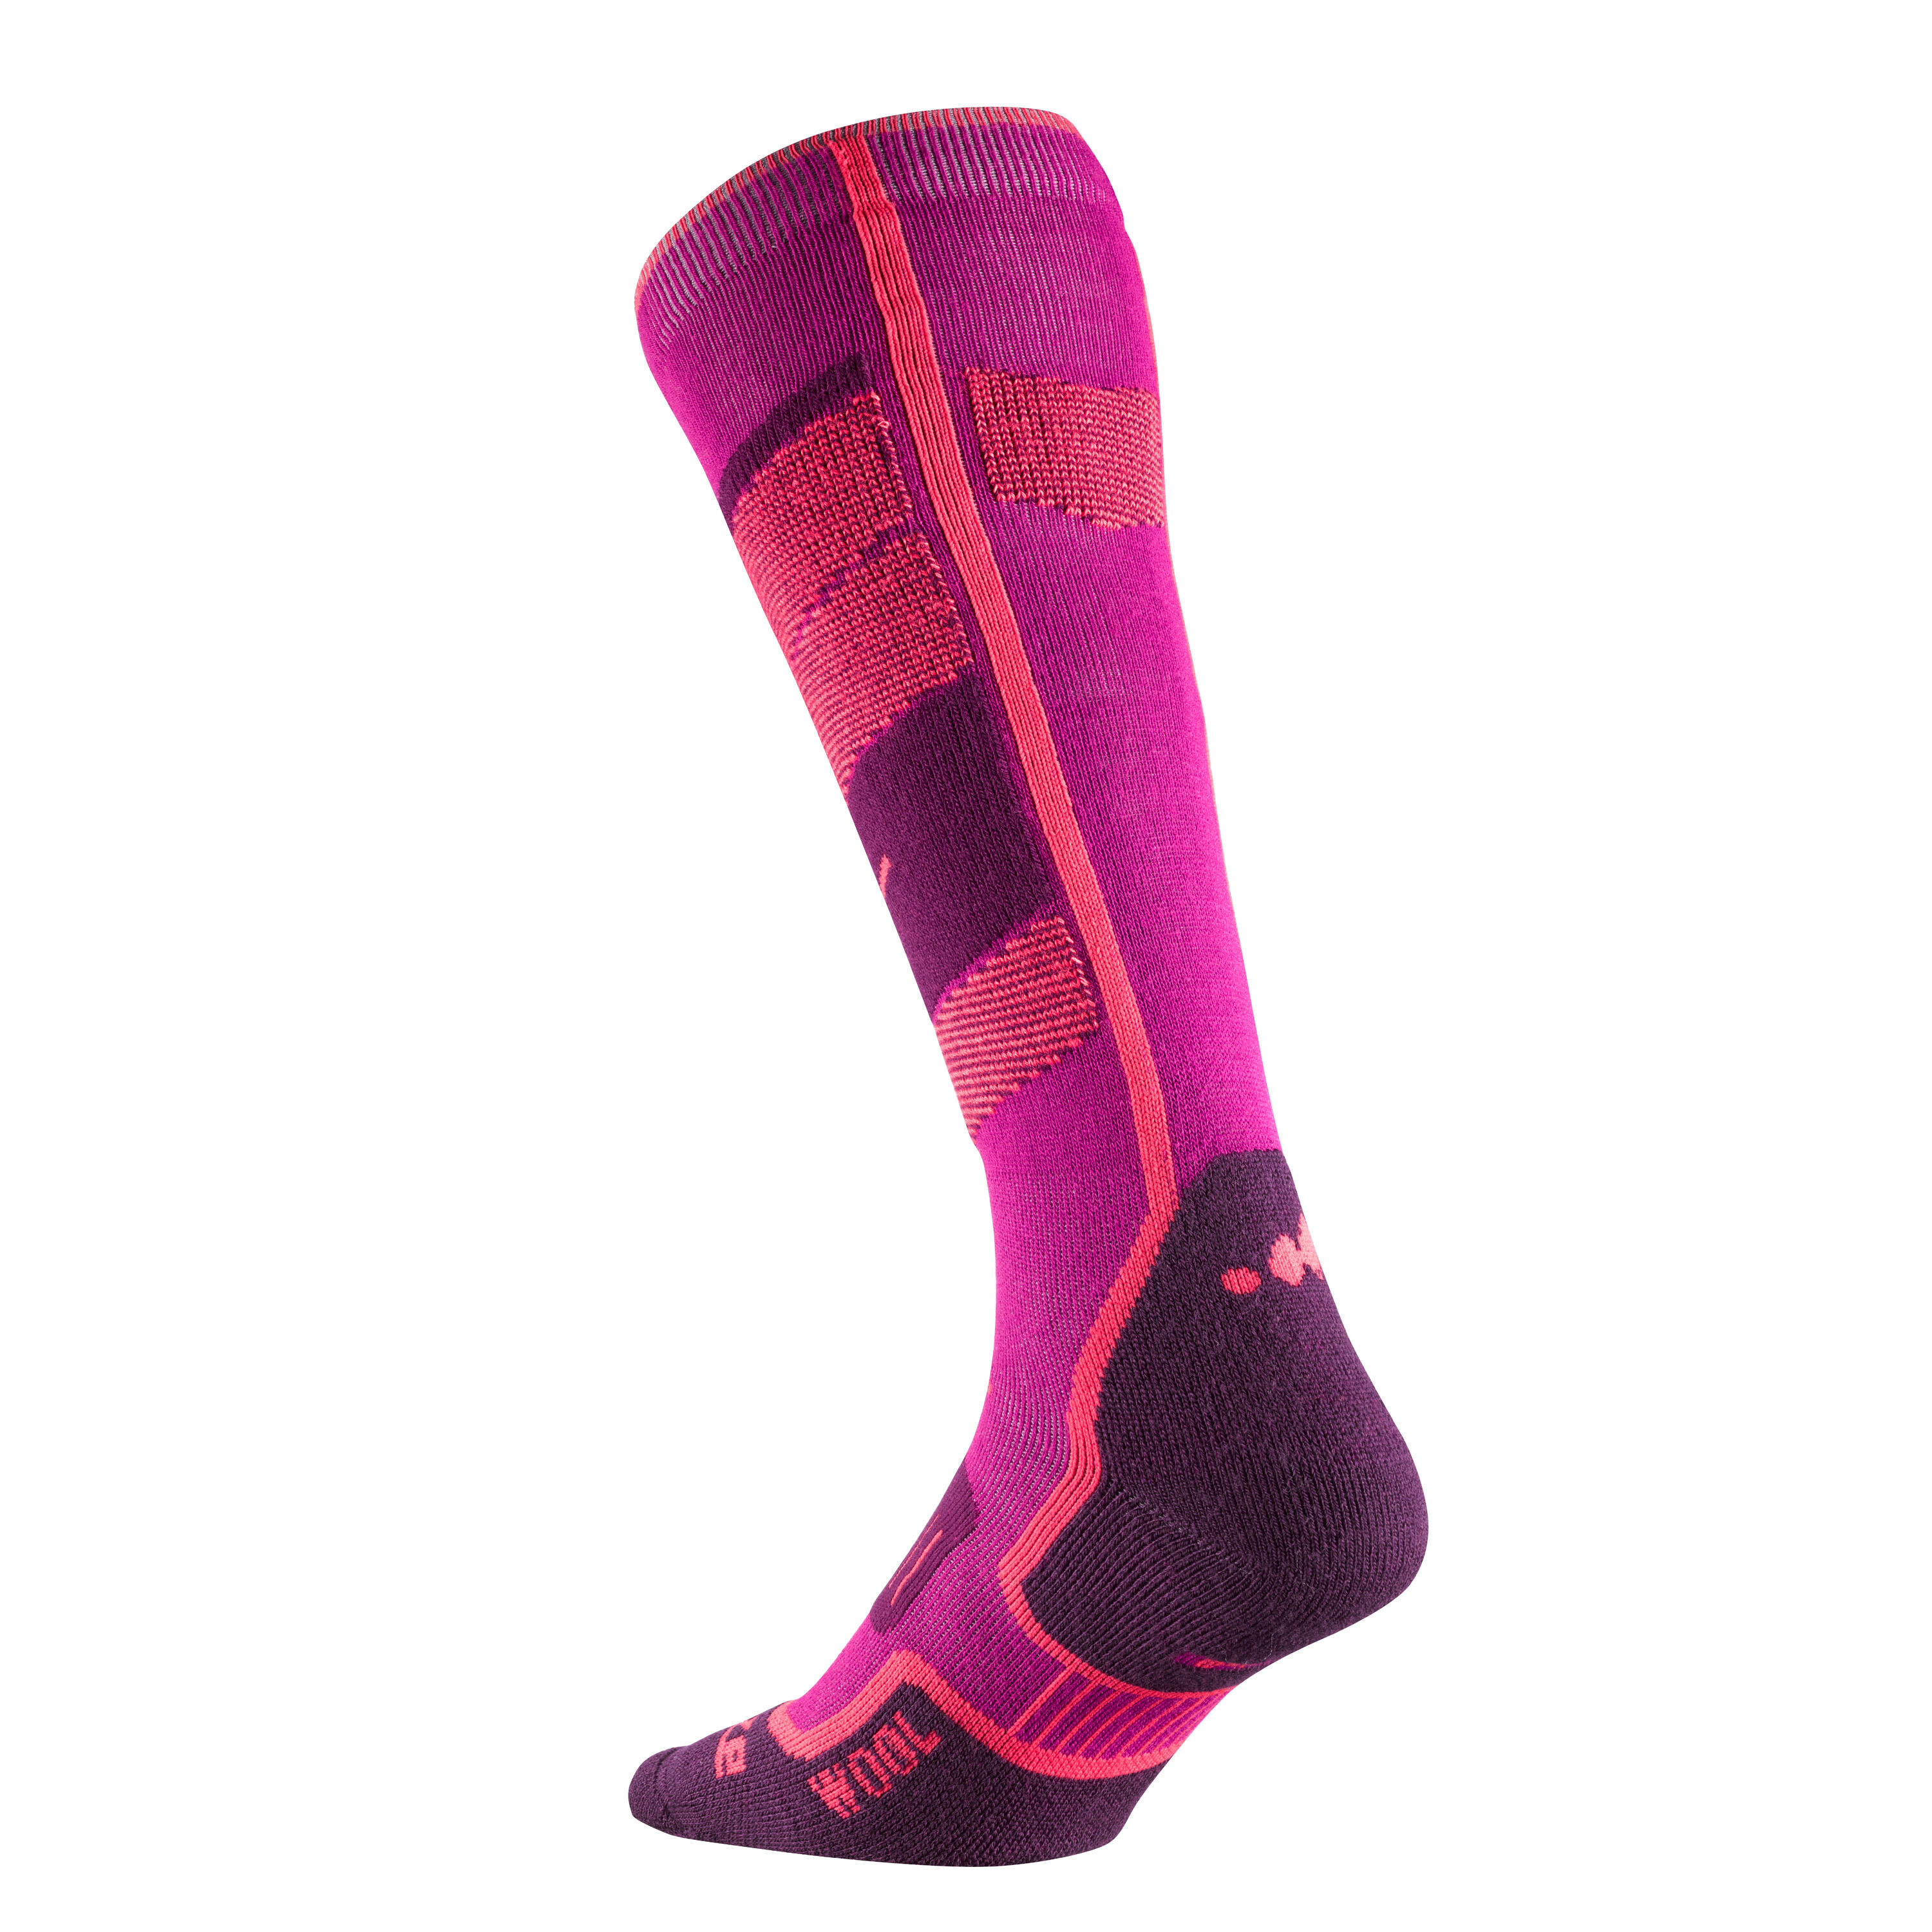 300 Adult Ski Socks - Pink 4/5